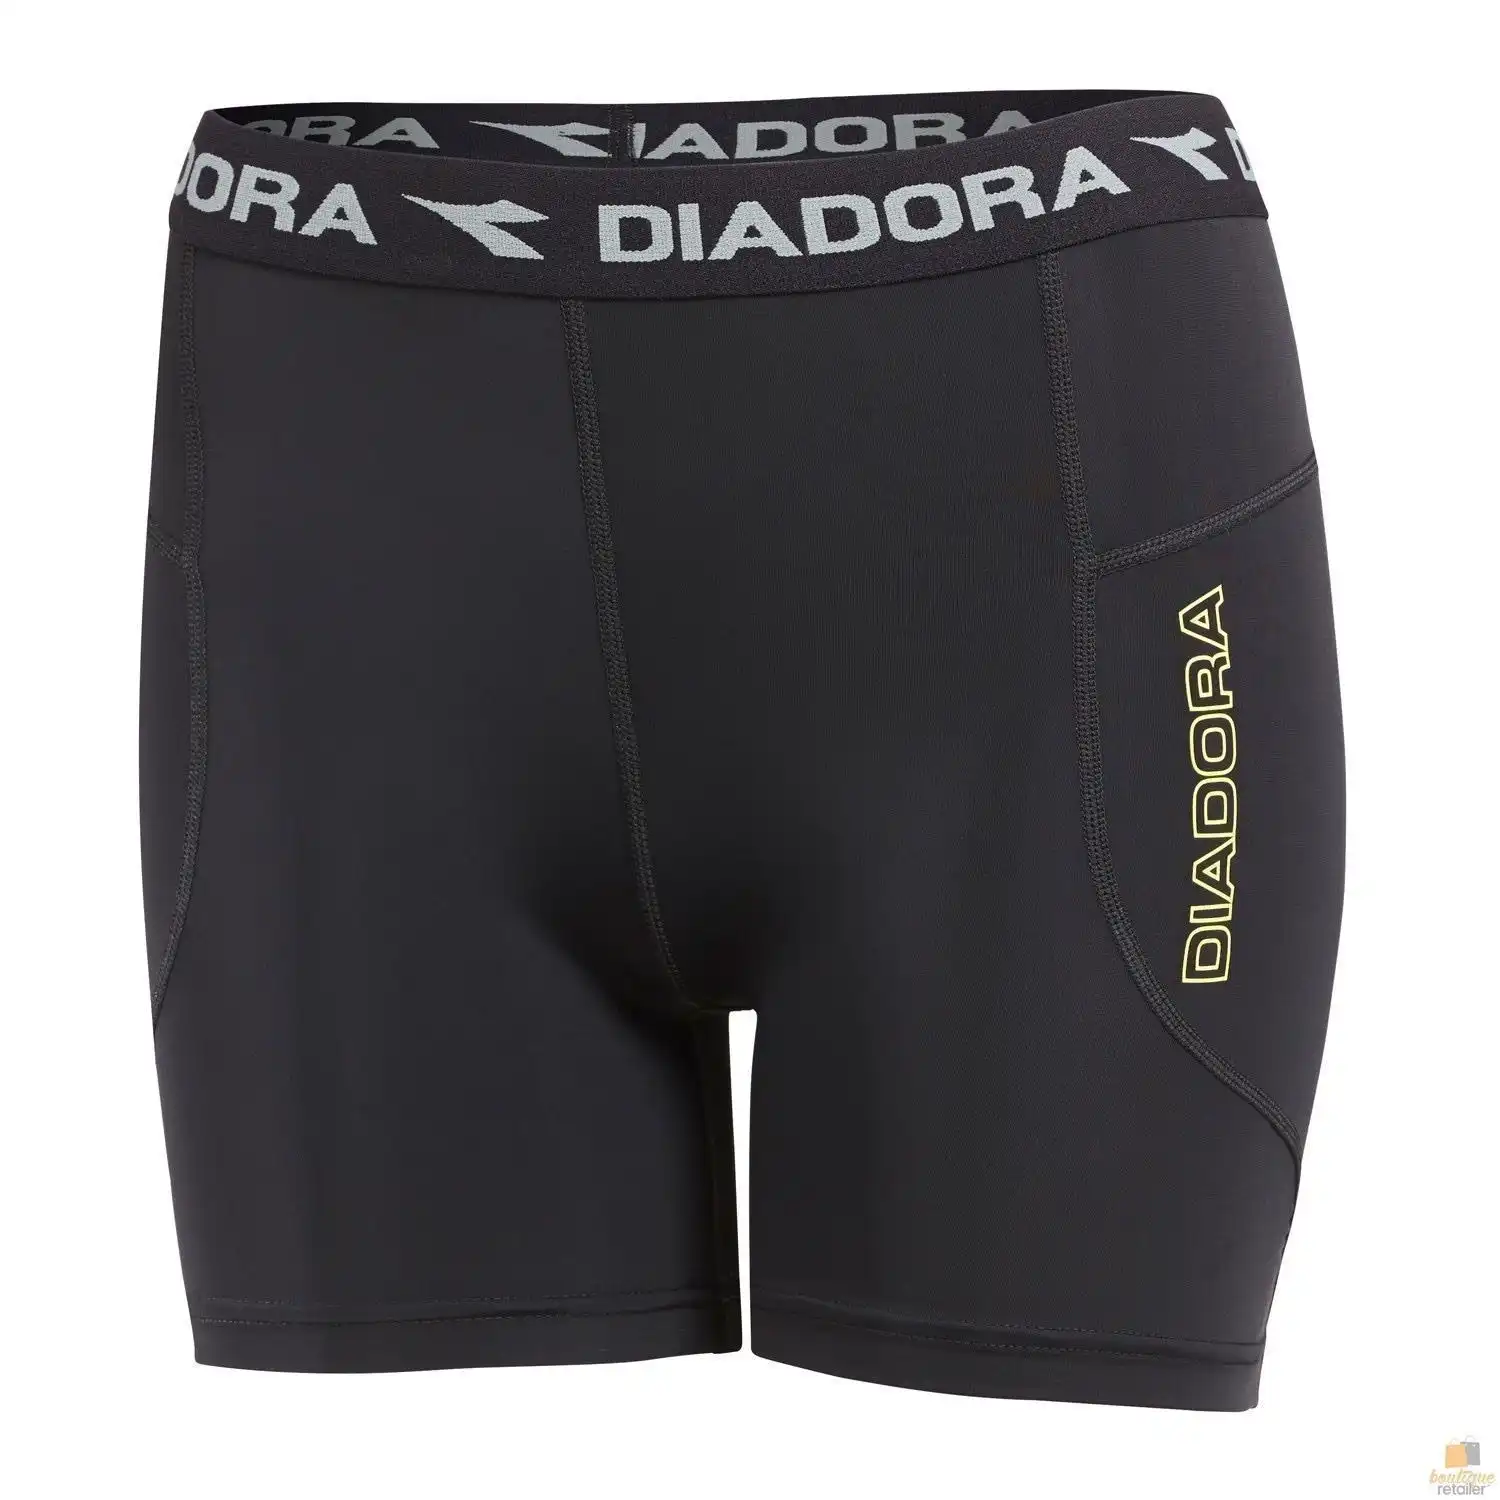 Diadora Ladies Compression Shorts Thermal Fitness Gym Yoga - Black